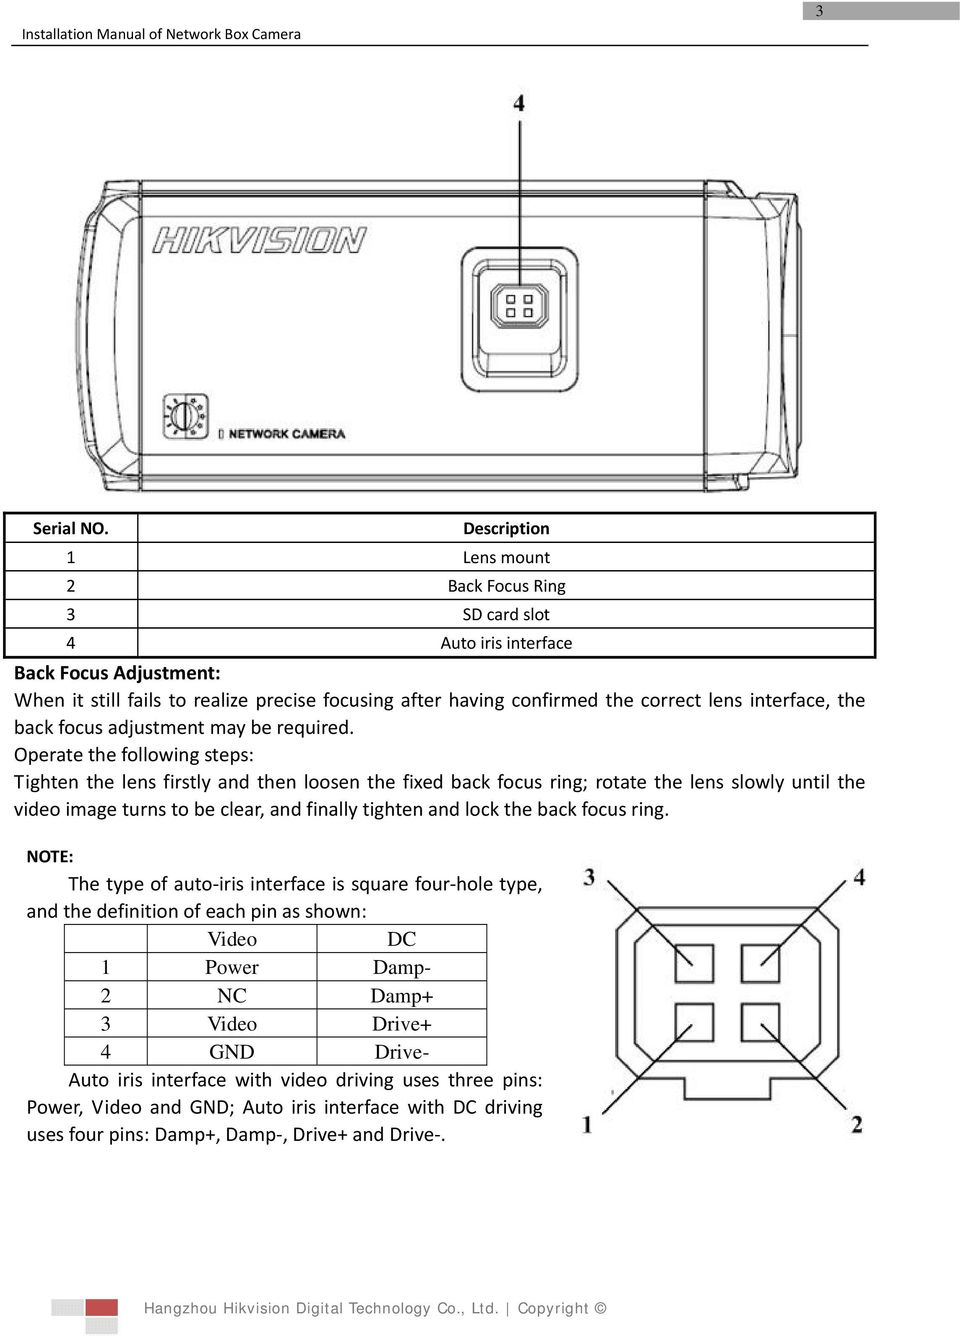 Network Box Camera Installation Manual